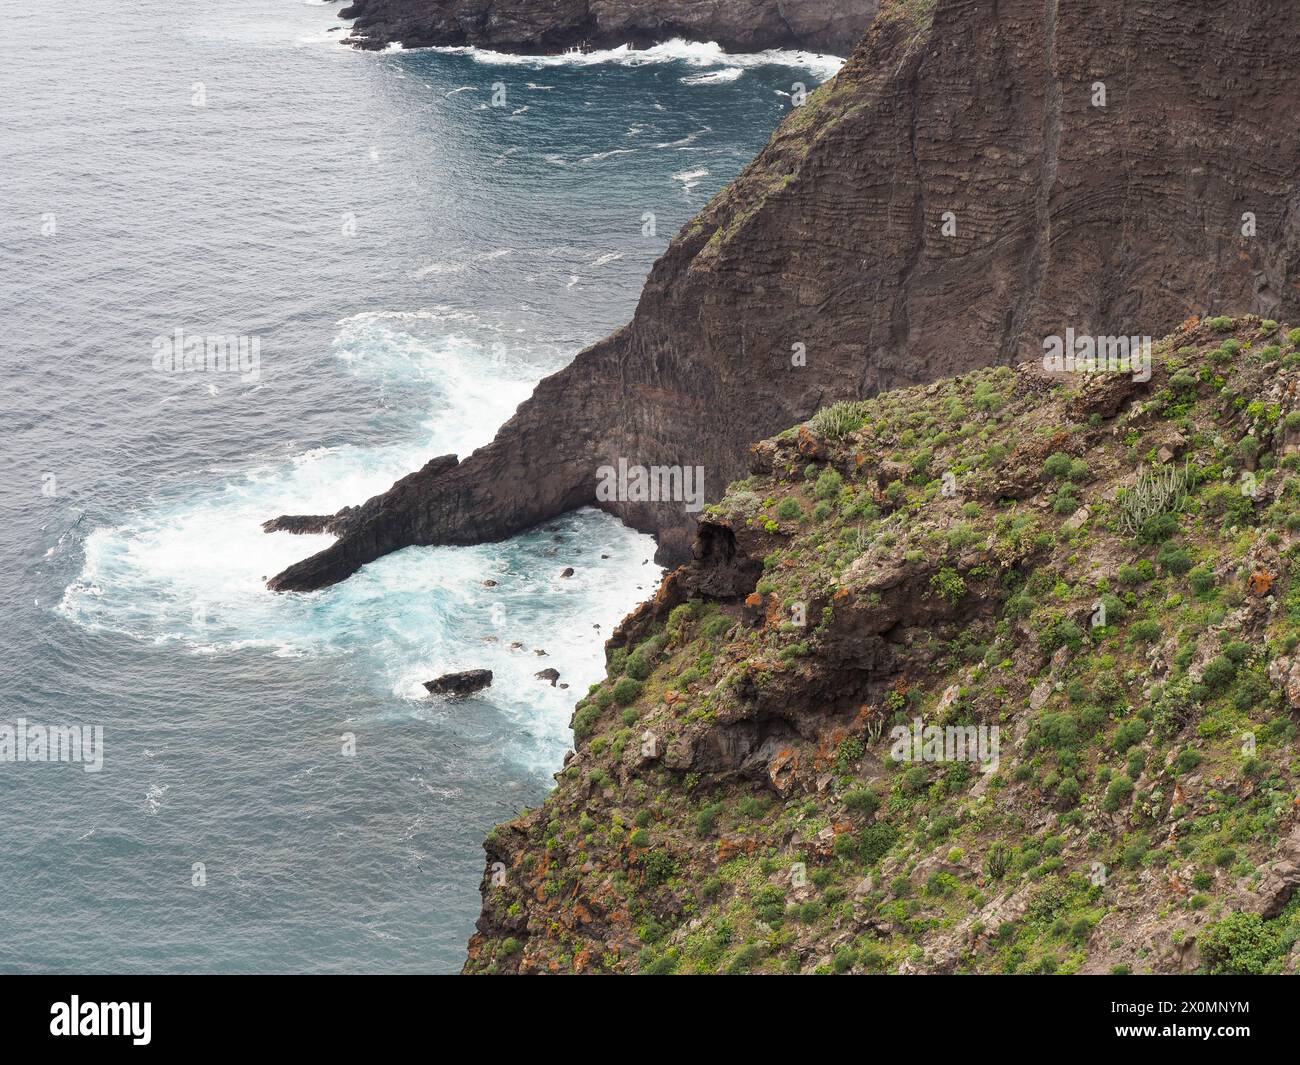 Tenerife, Spain: Mirador Punta del Fraile, Rocky coast of the Atlantic Ocean. Stock Photo